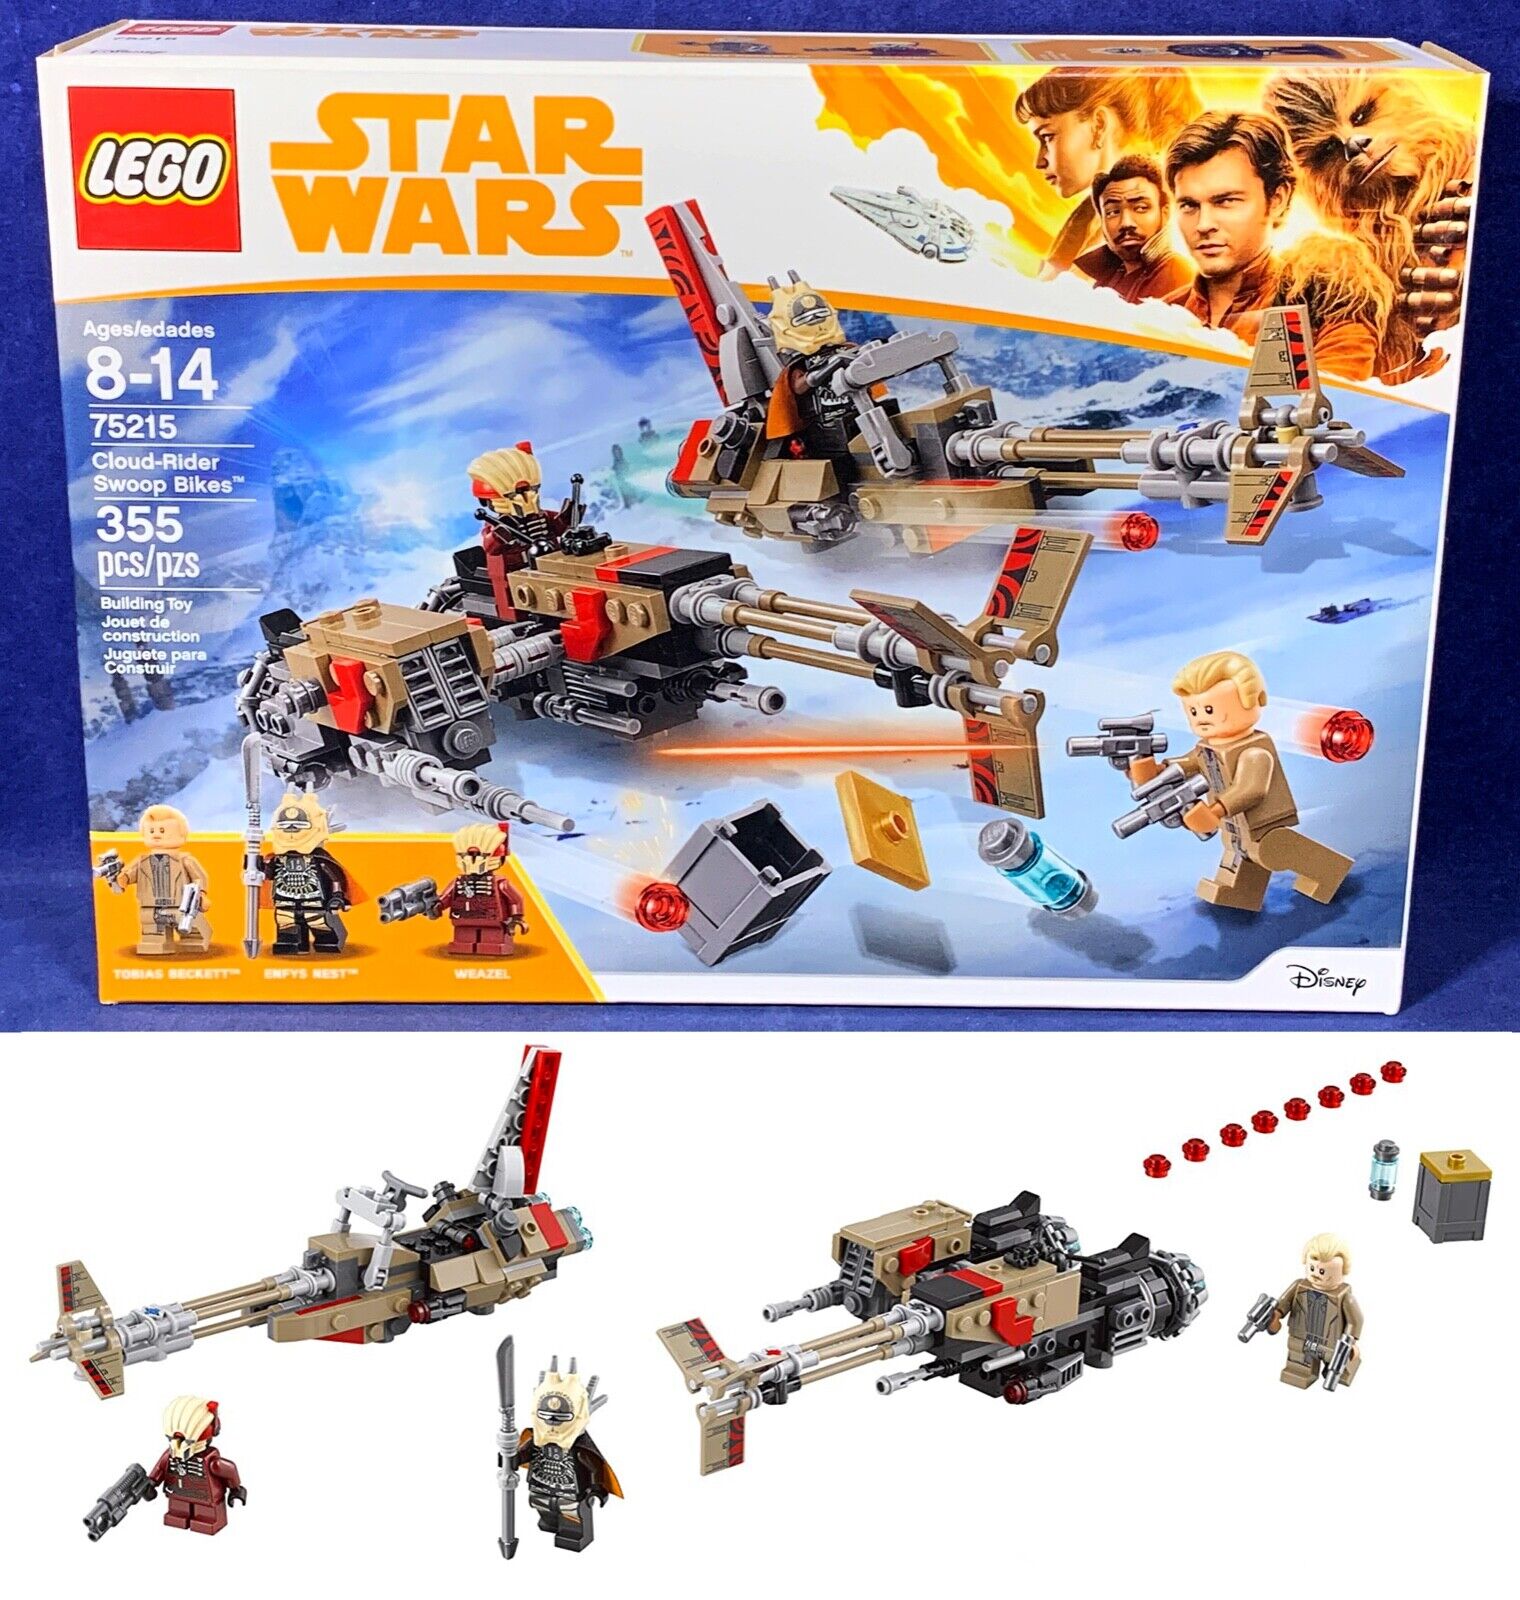 New CLOUD-RIDER SWOOP BIKES Star Wars Lego 75215 Building Set WEAZEL Enfys Nest